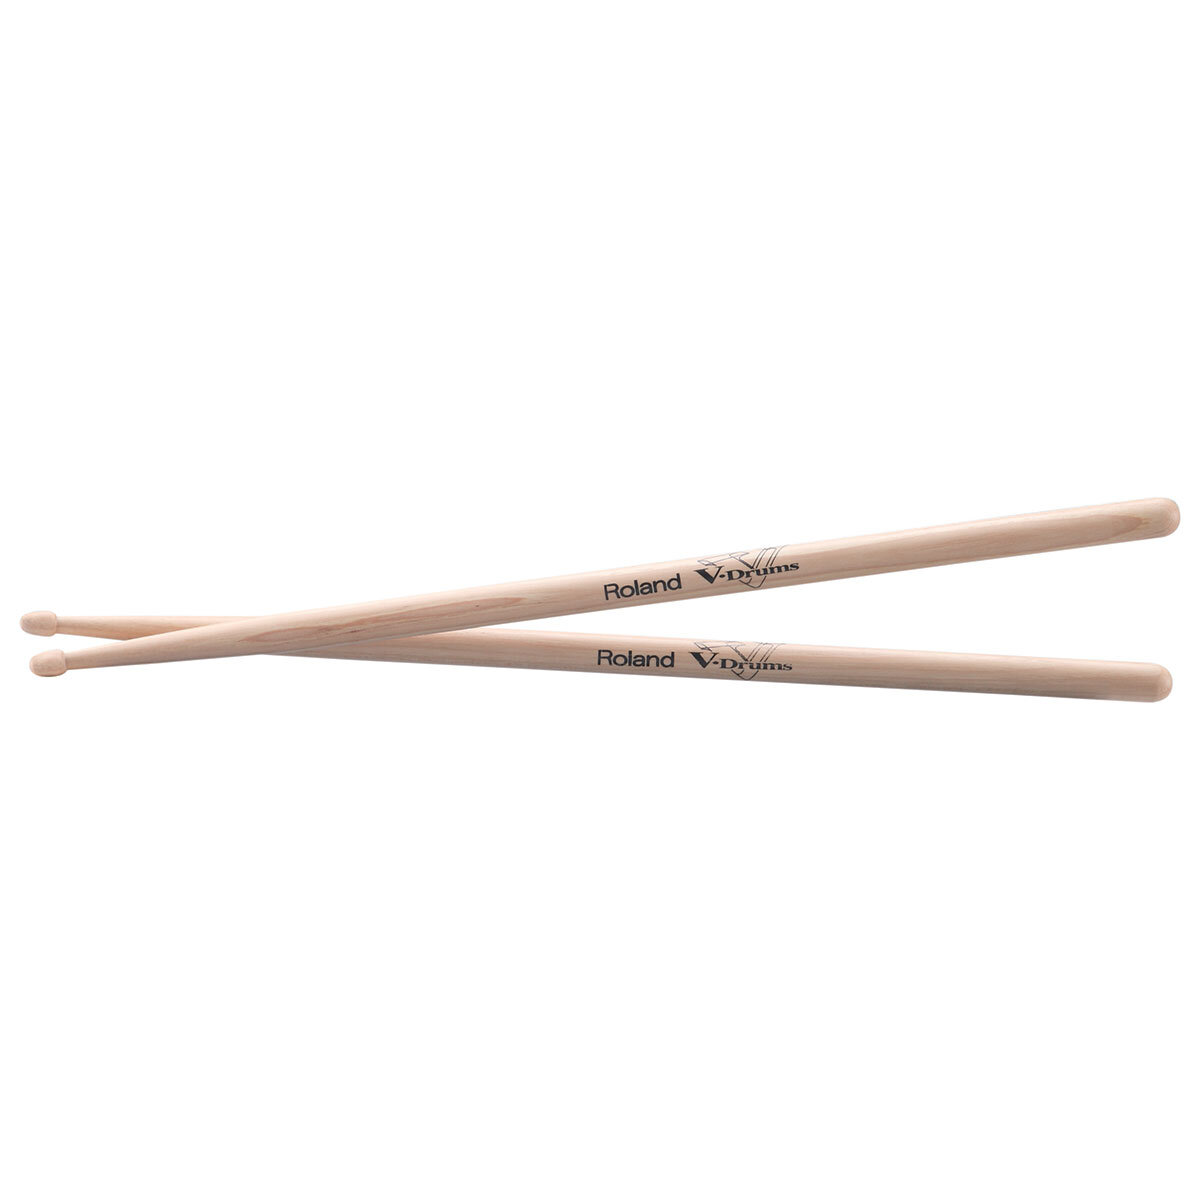 DAP-3X V-Drums Accessory Package- Drumsticks